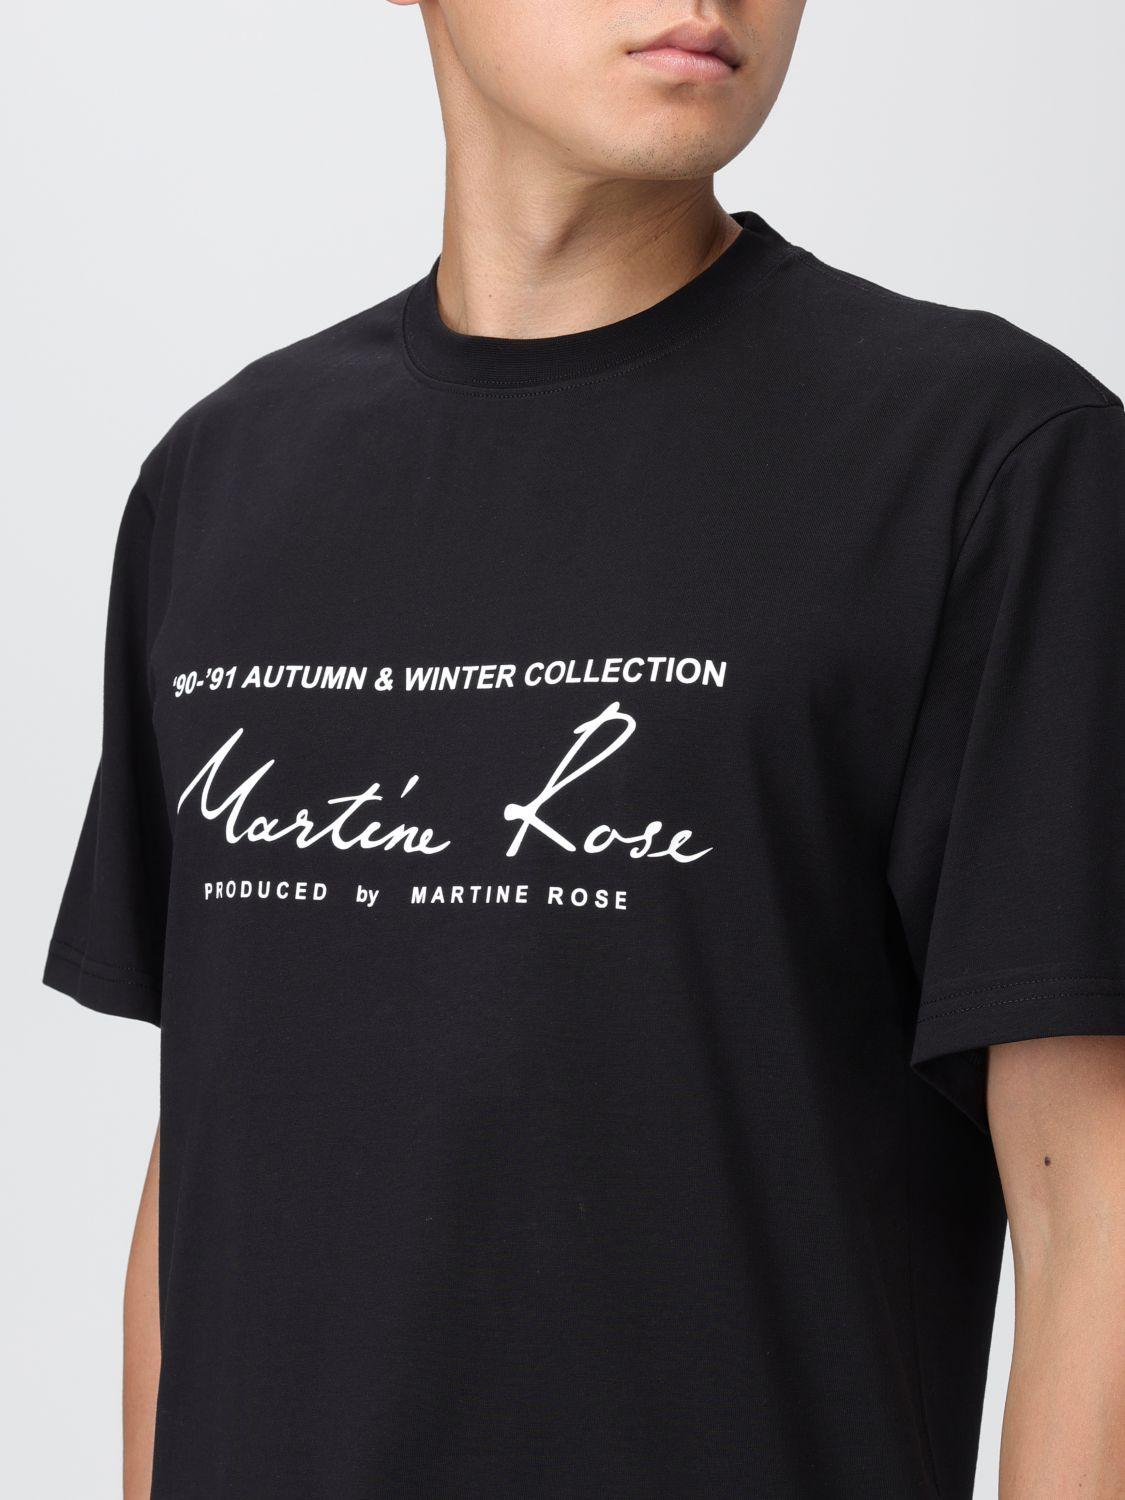 Martine Rose T-shirt in Black for Men